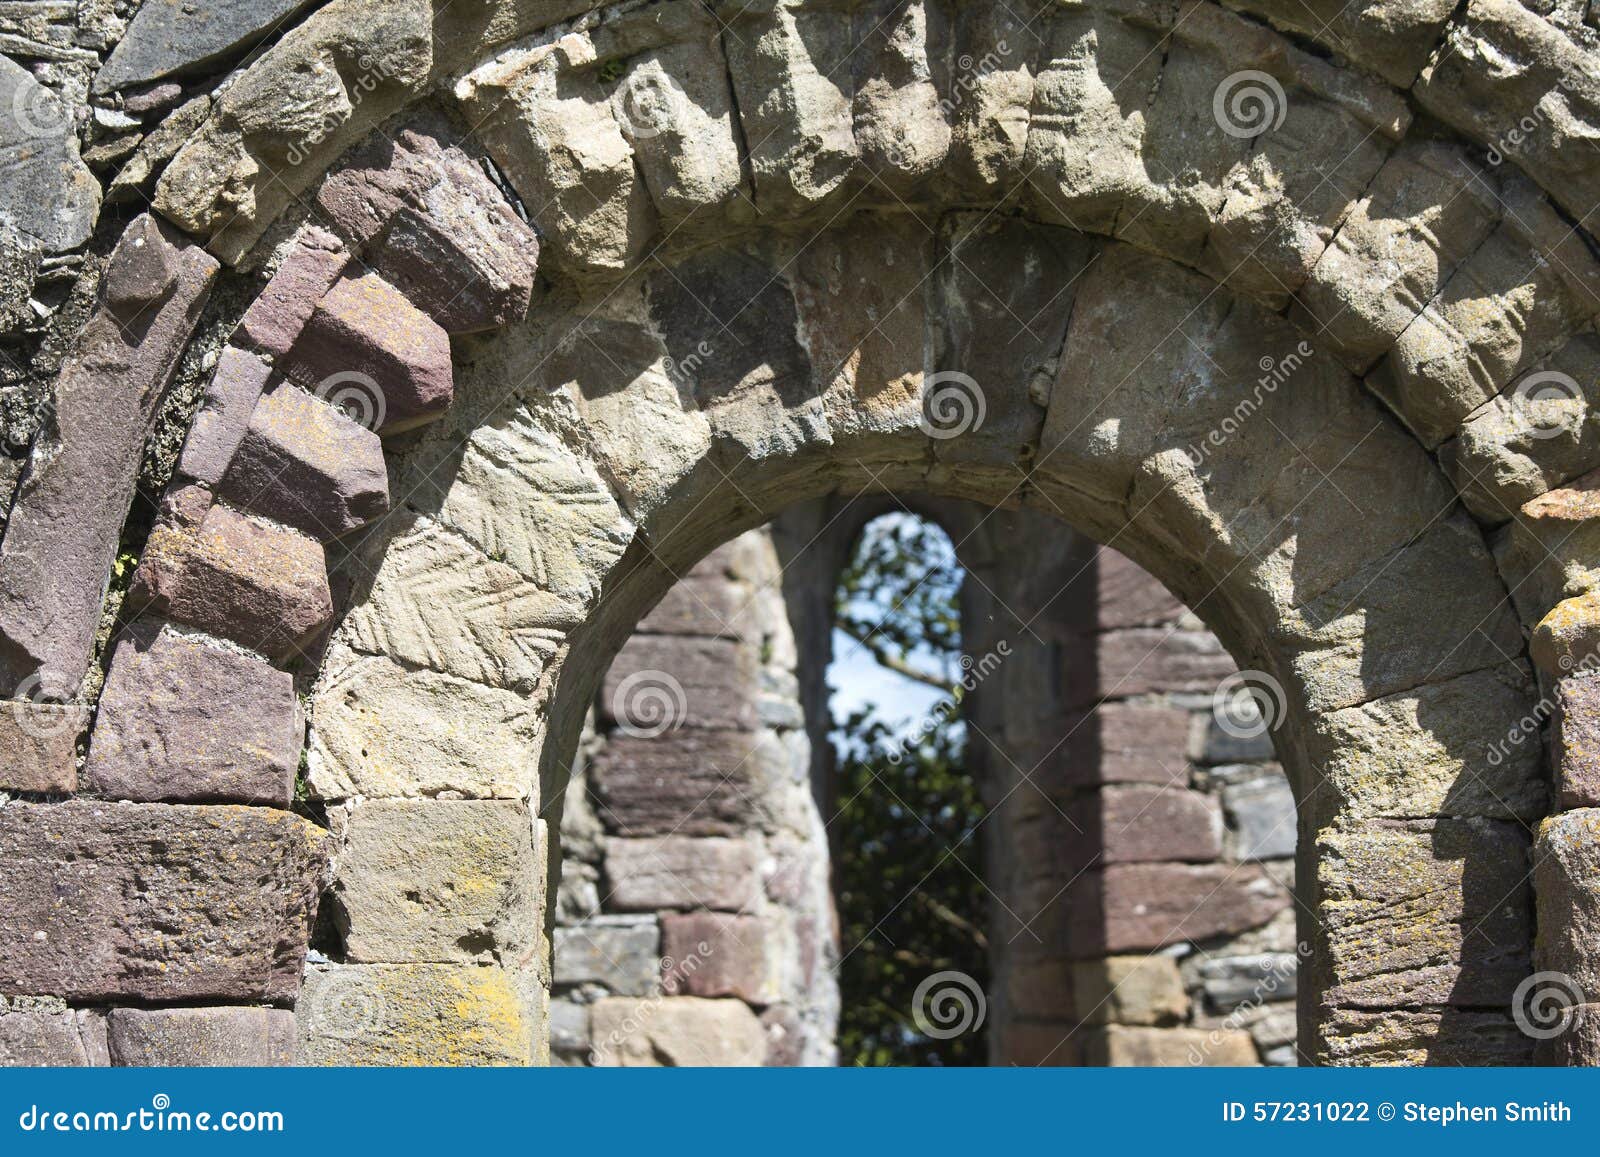 detailed stone archways, innisfallen abbey on innisfallen island